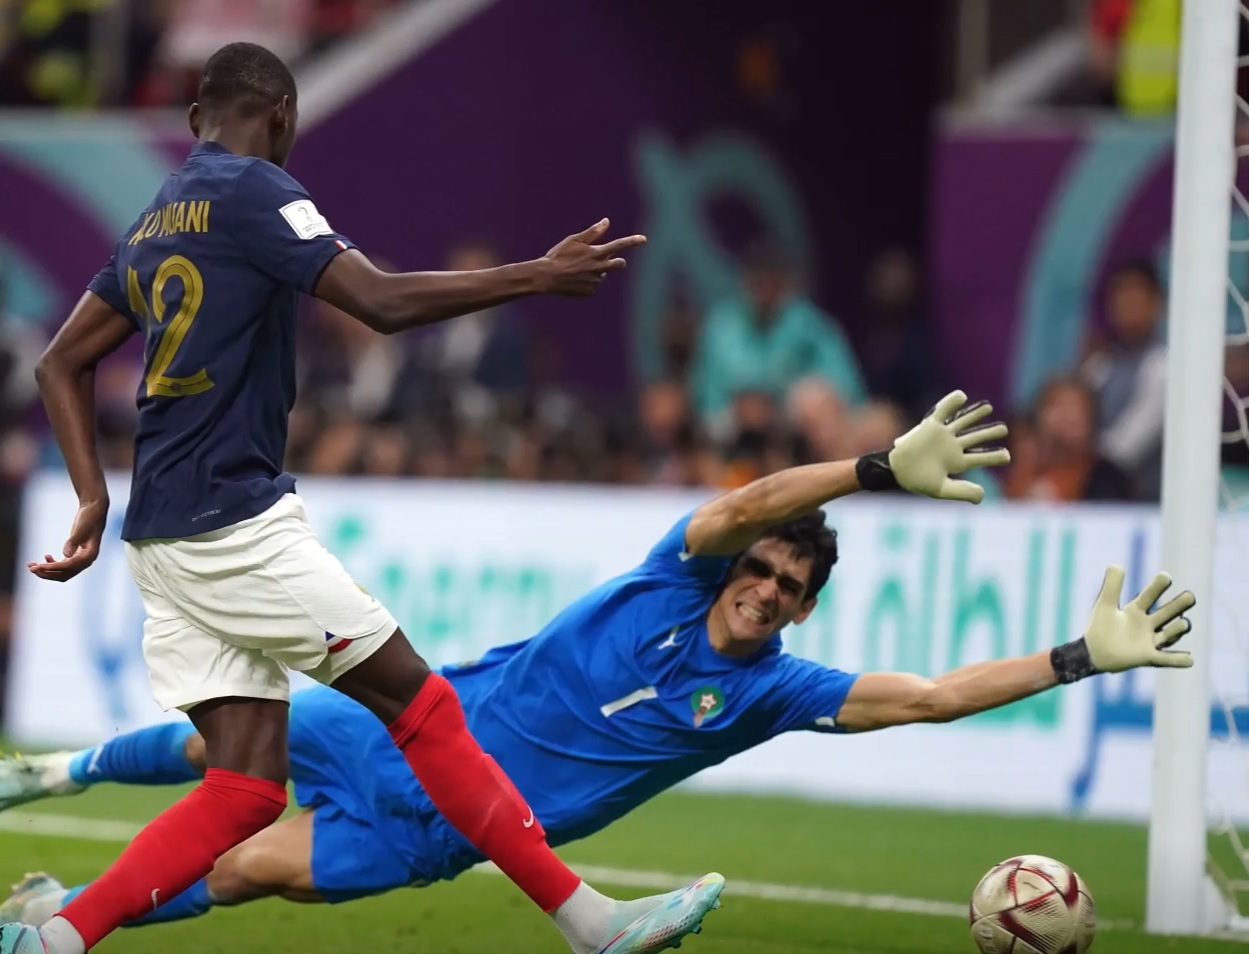 Kolo Muani “in a dream” after “magical” World Cup semi-final goal